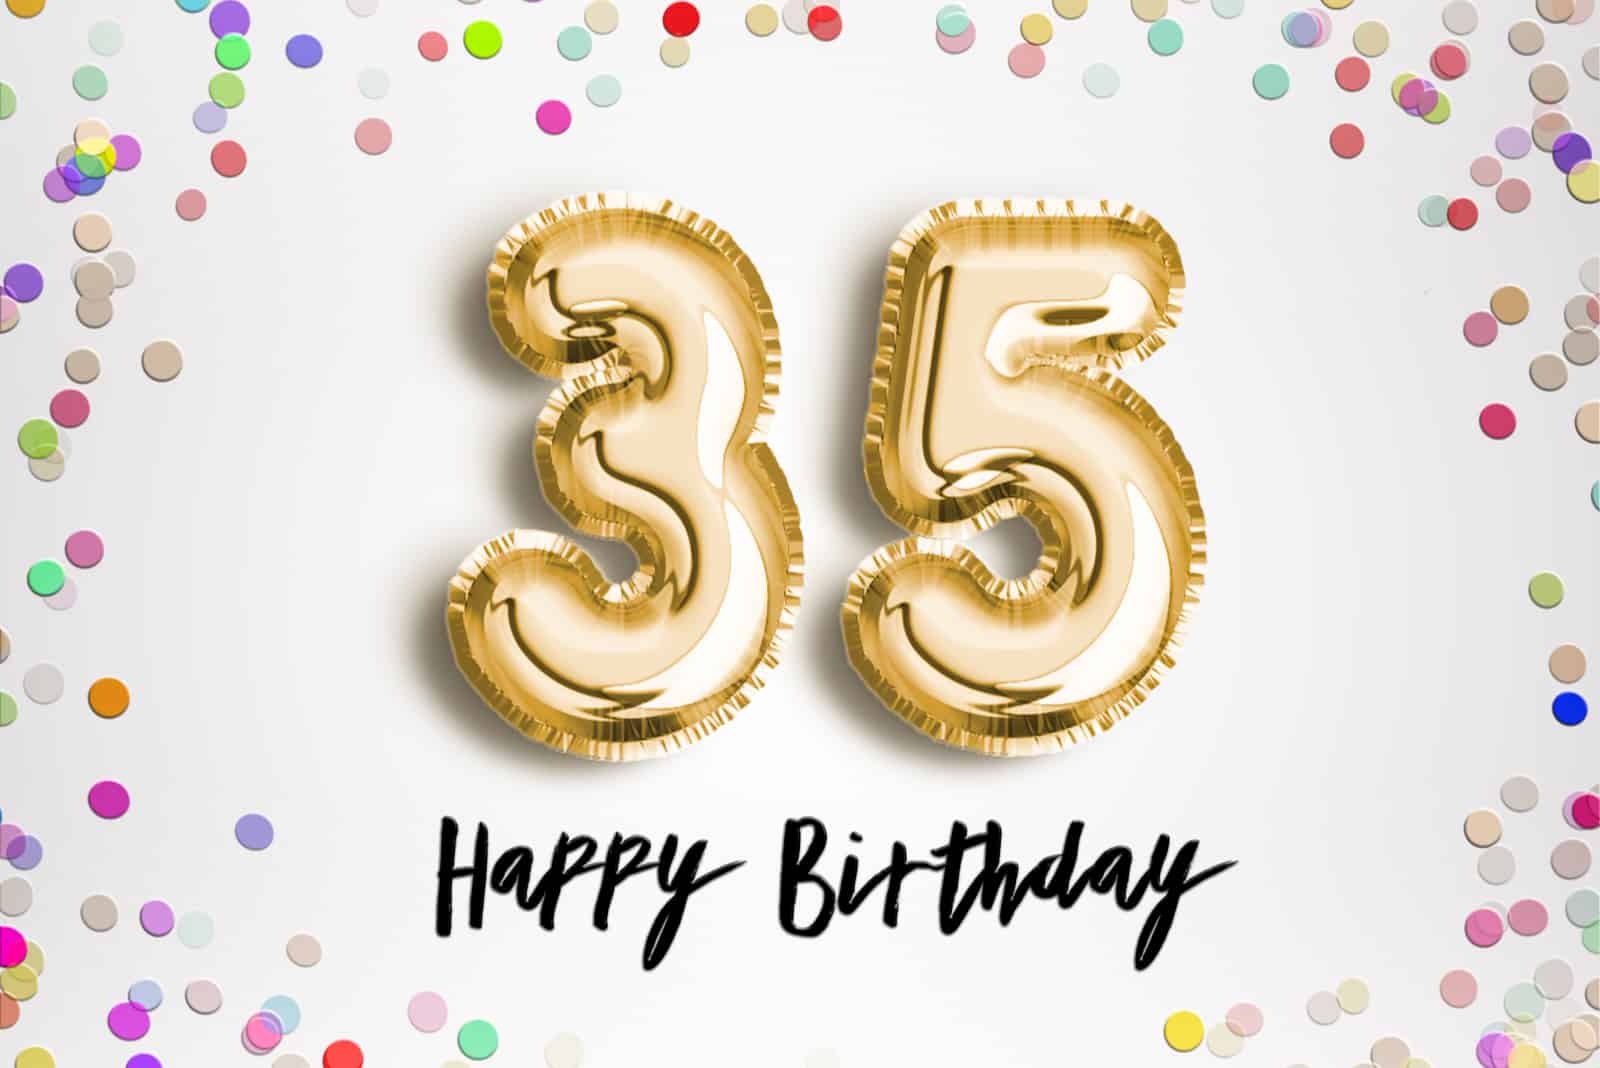 100 Sweet & Unique Happy 35th Birthday Wishes & Quotes